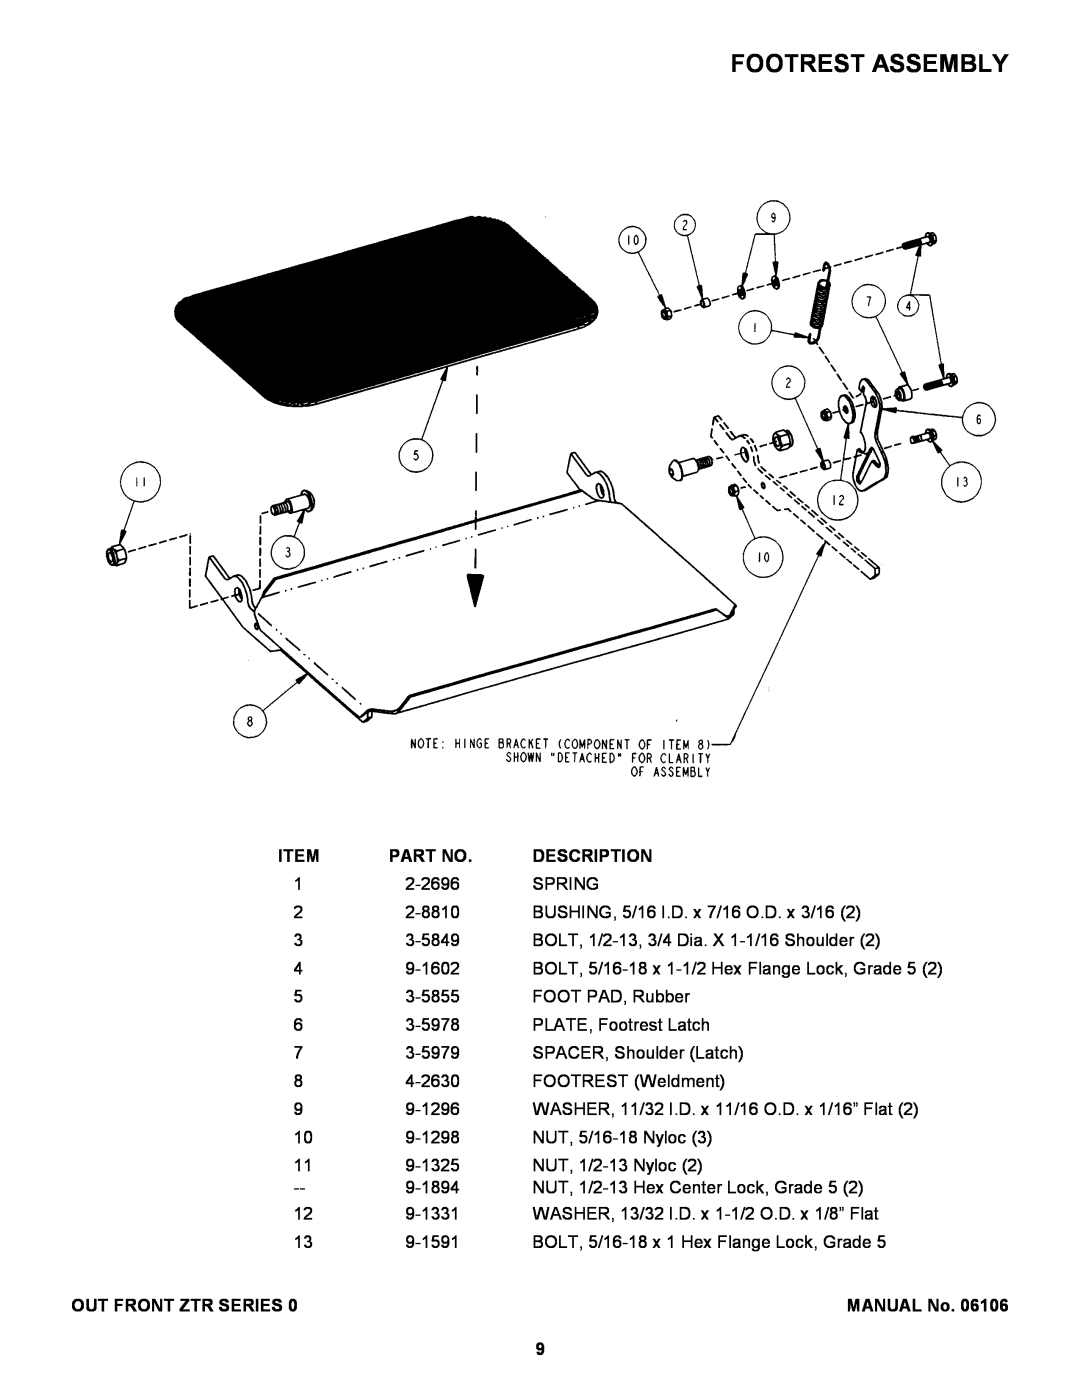 Snapper ZF2500KH, ZF2200K manual Footrest Assembly, Part No, Description, Out Front Ztr Series, MANUAL No 